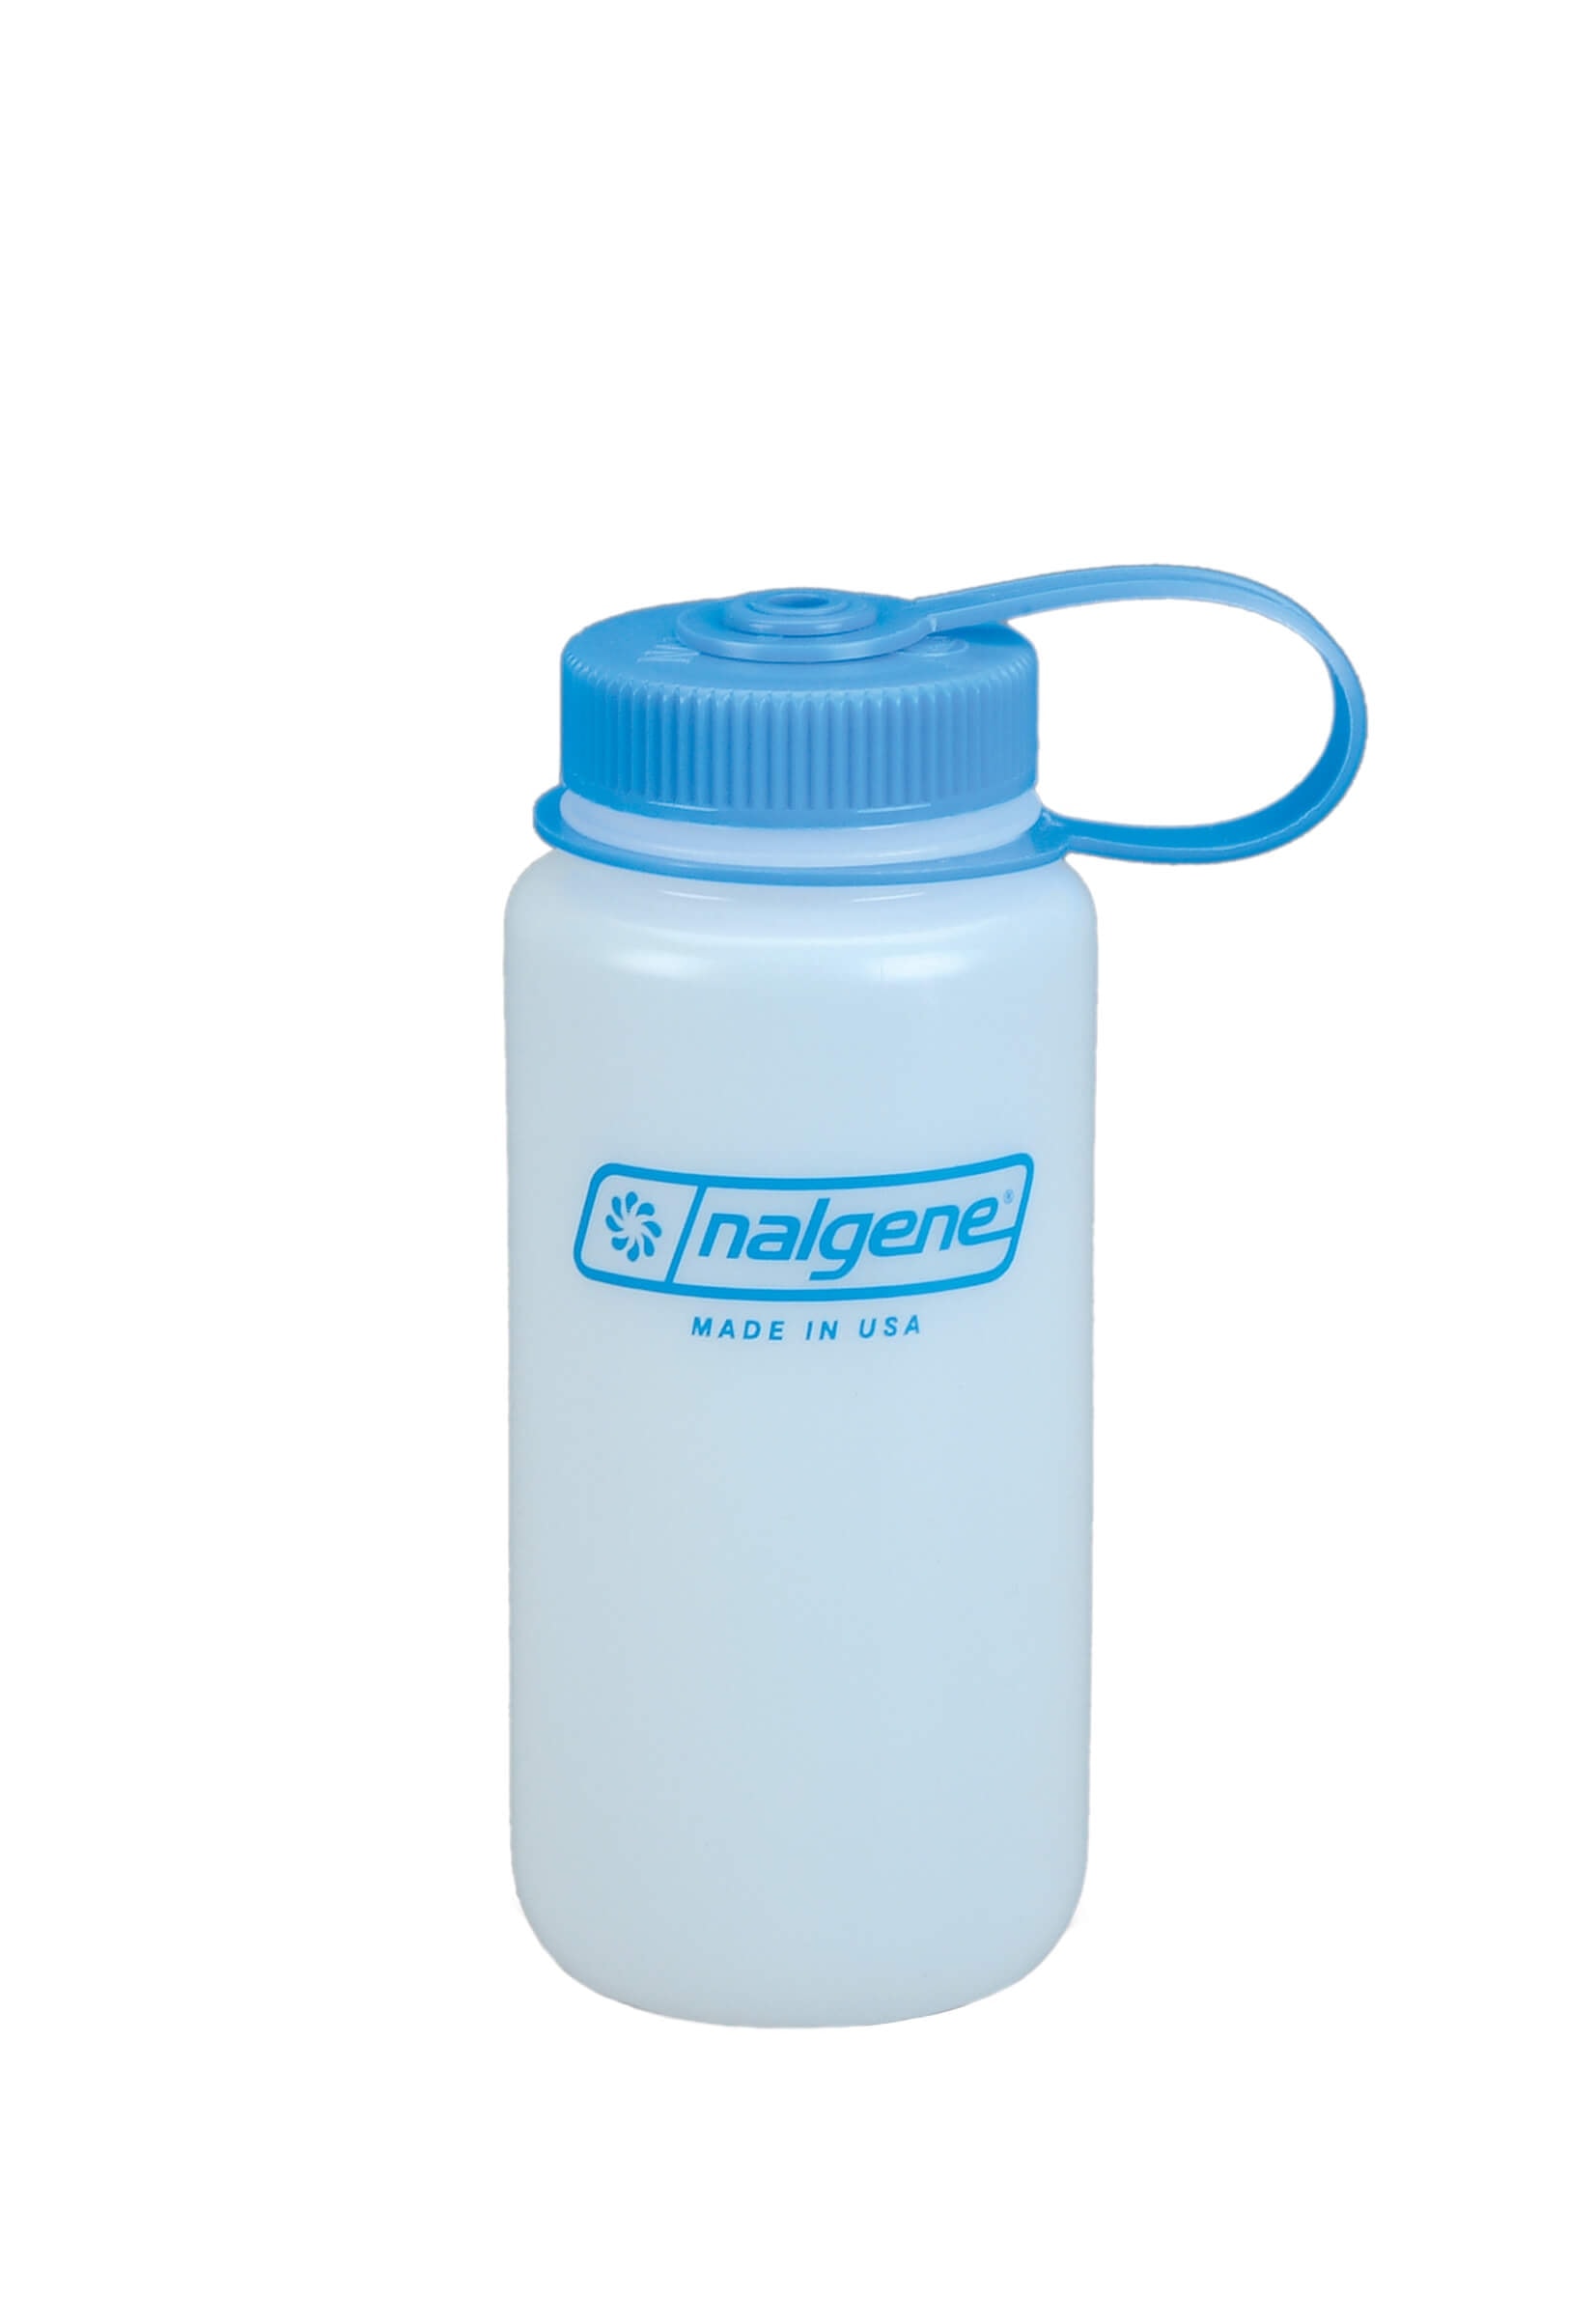 NEW Nalgene Ultralite Wide Mouth 2oz BPA-Free HDPE Round Storage Bottle 3-Pack